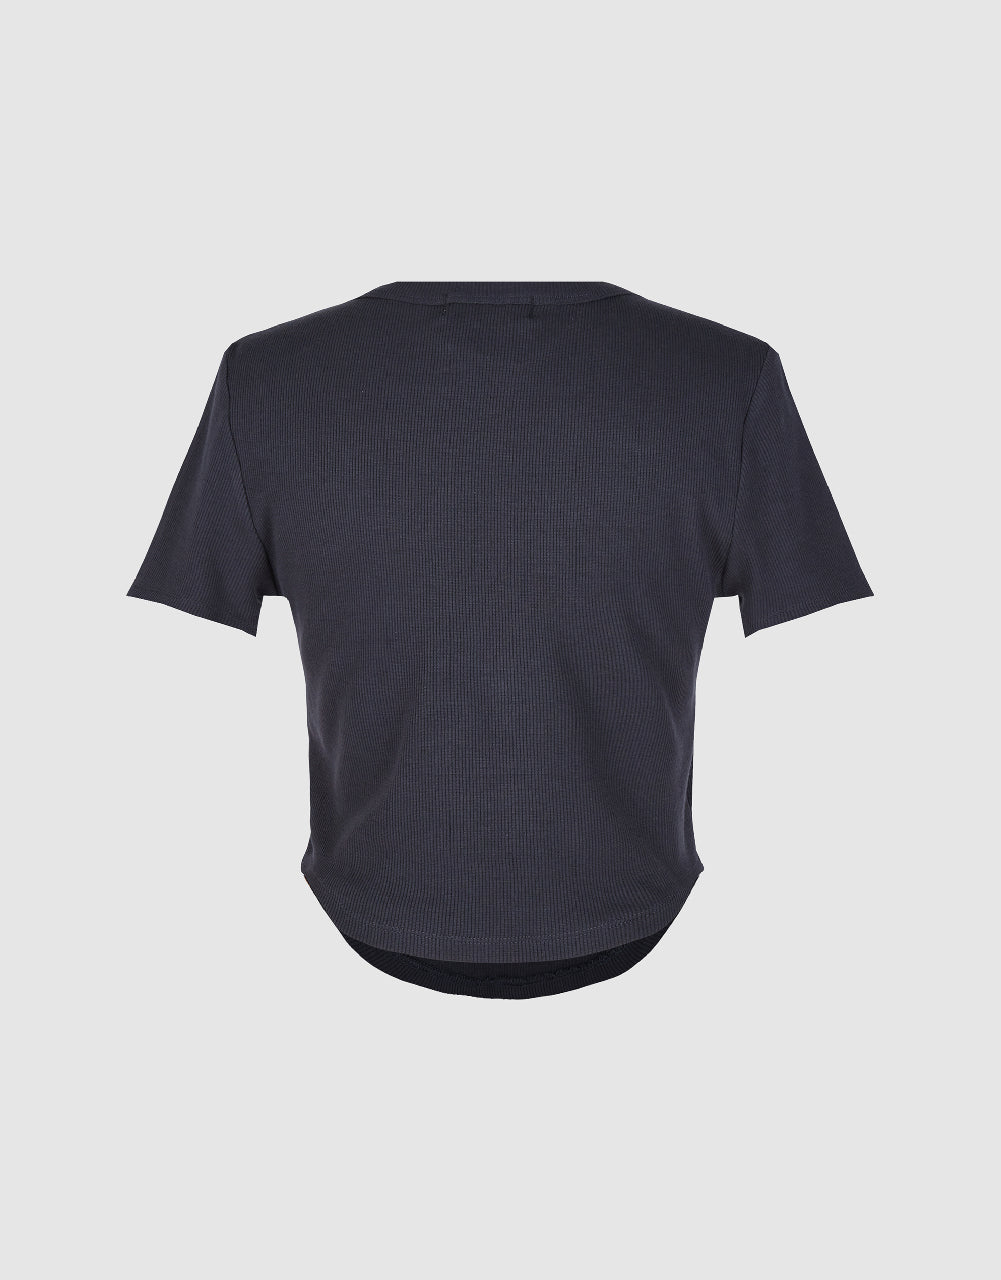 Raglan Sleeve Knitted T-Shirt